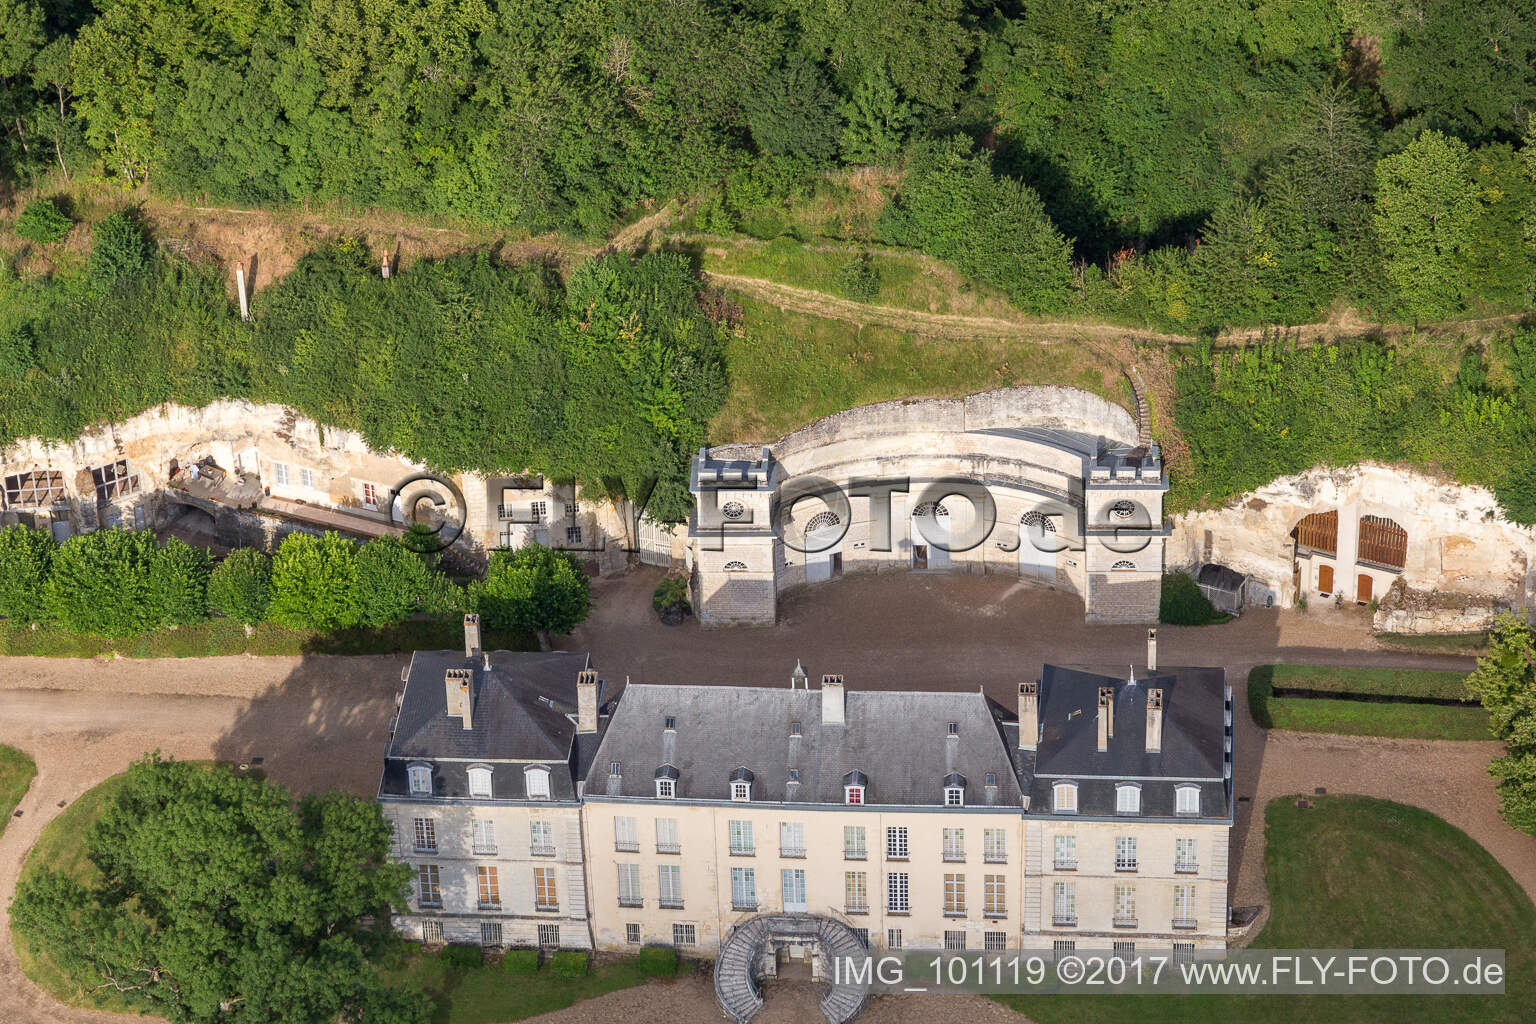 Building and castle park systems of castle Chateau de Rochambeau in Thore-la-Rochette in Centre-Val de Loire, France from above